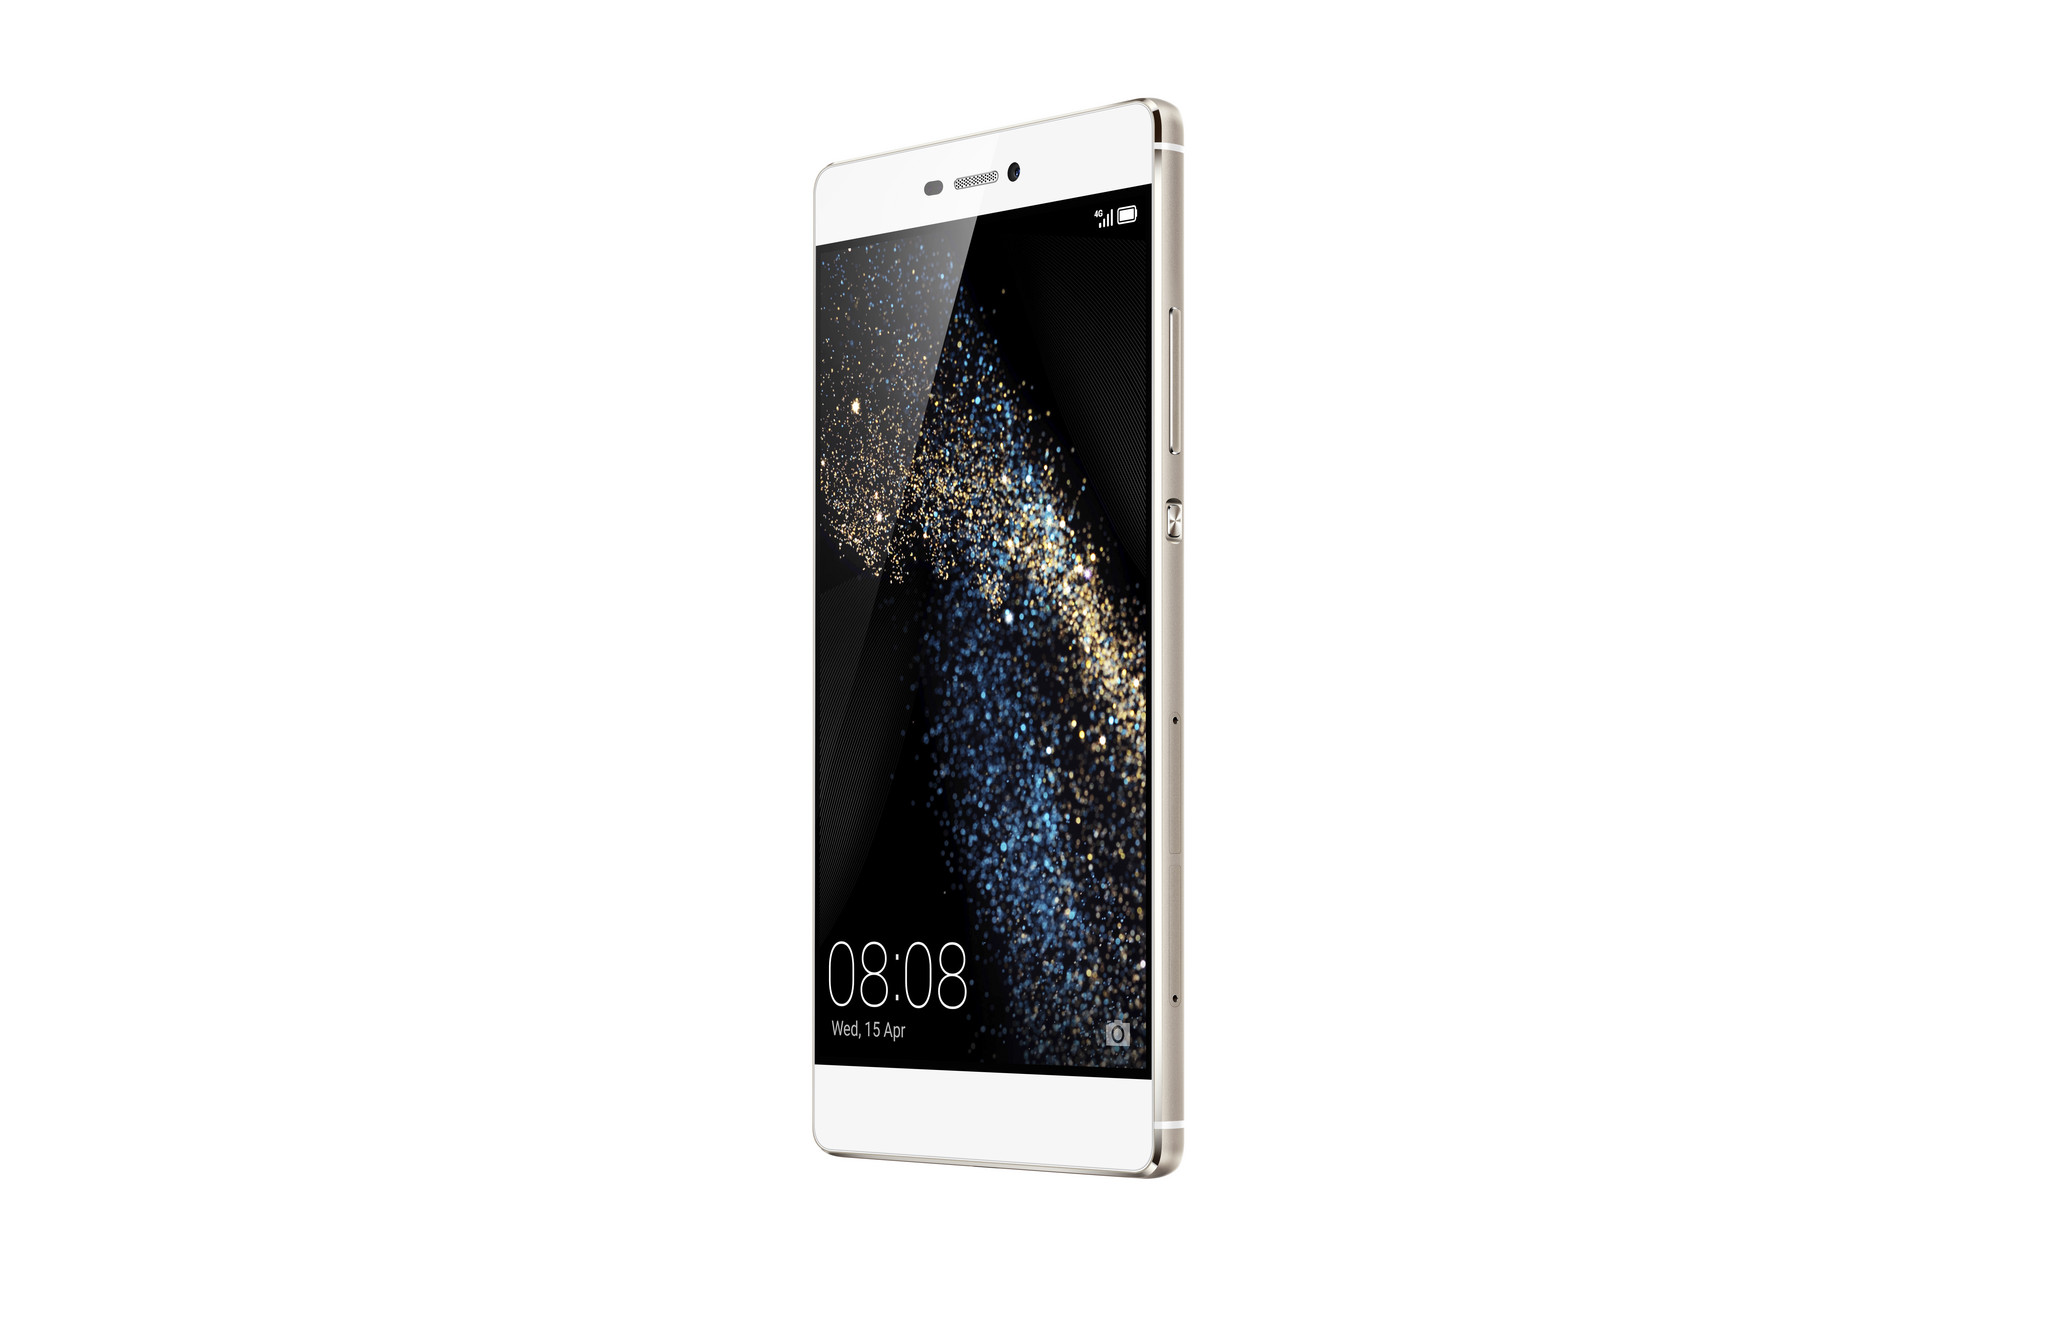 Huawei Grace_Champaign gold_A3_UI_Black BG_Product photo_EN_JPG_20150401(1).jpg